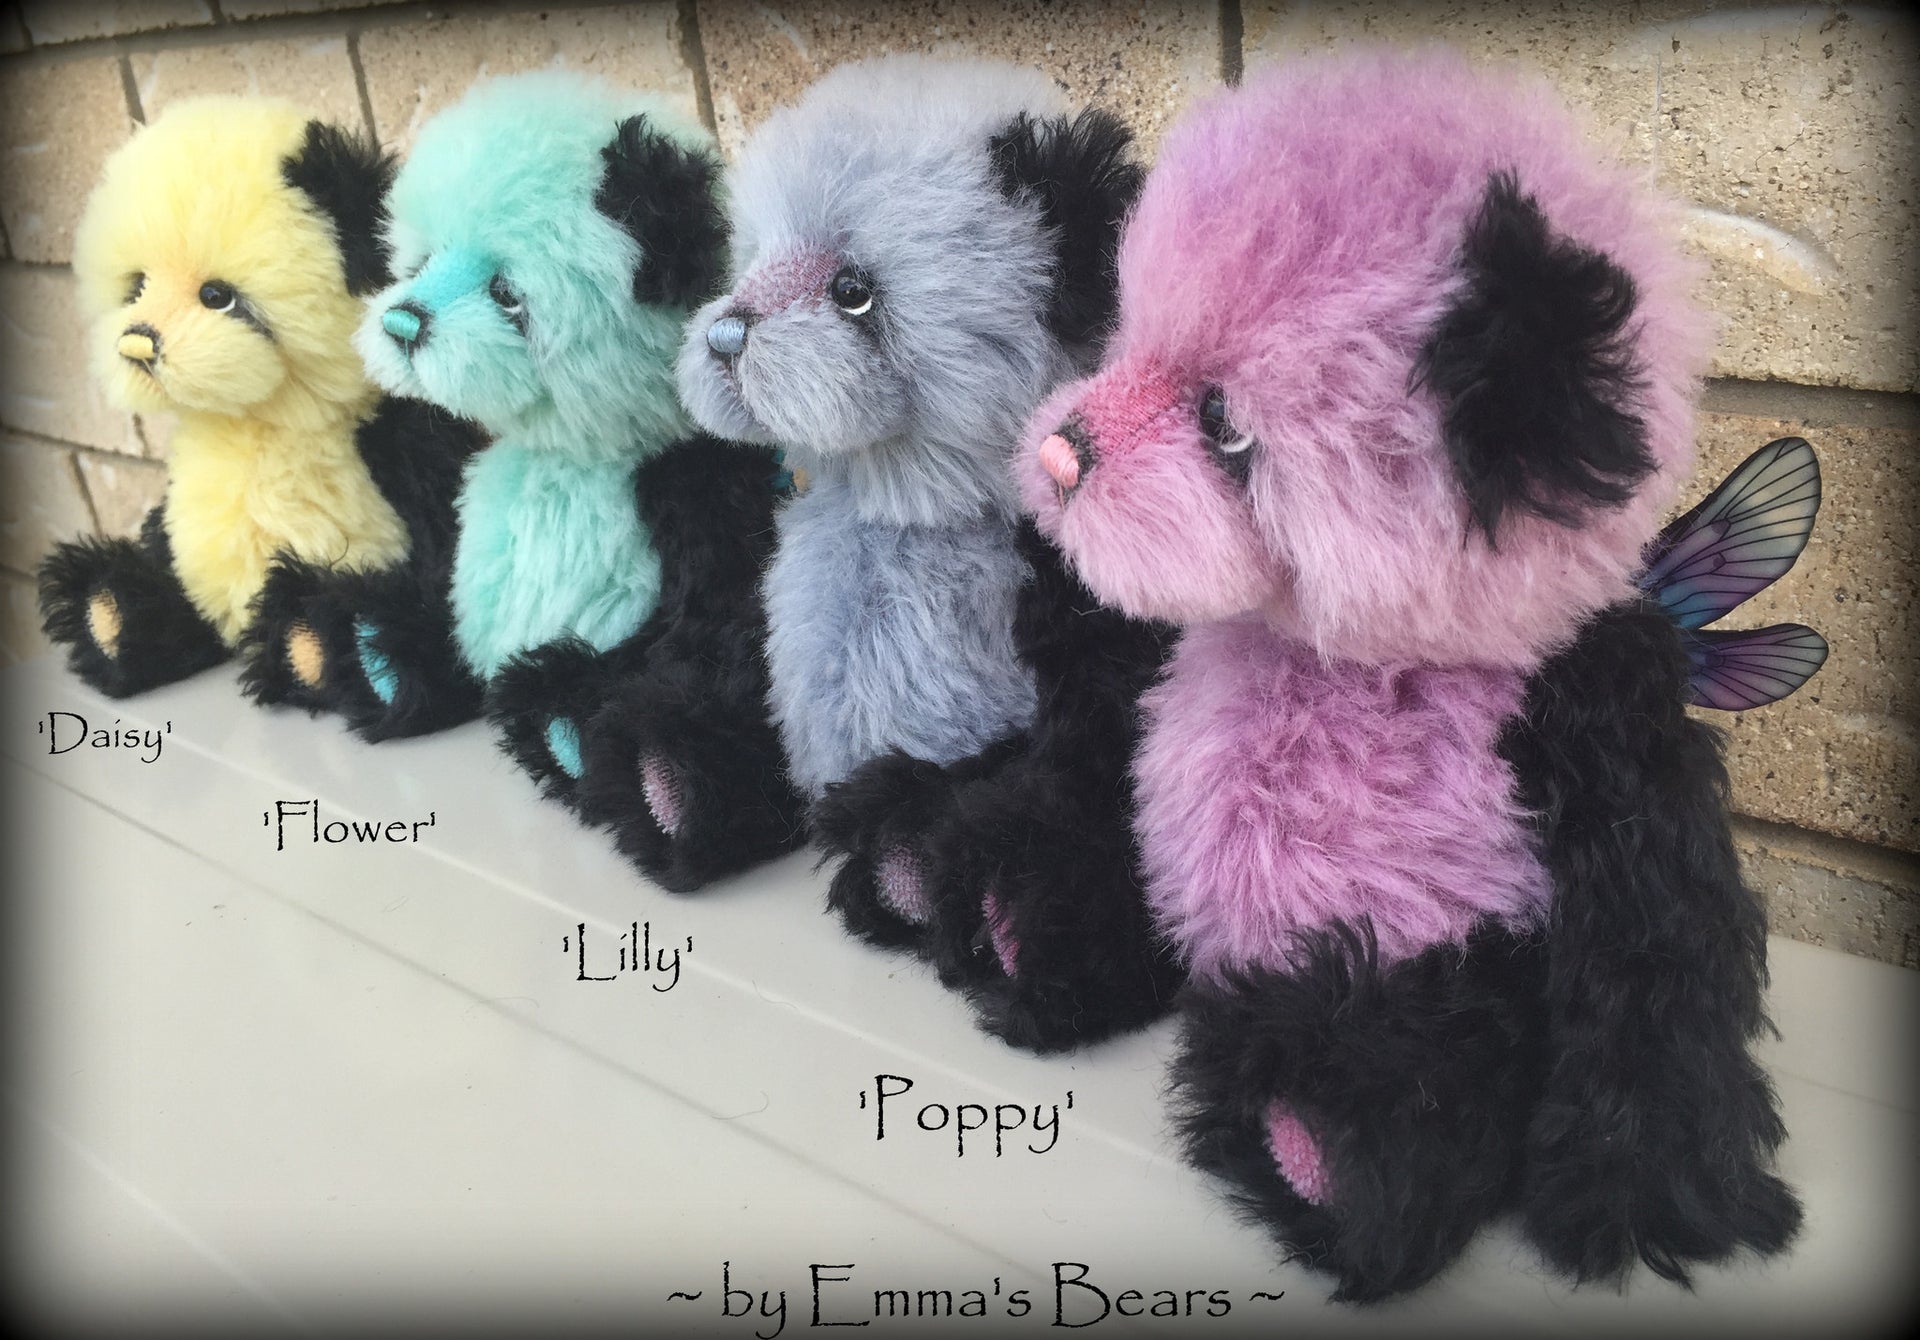 Order YOUR Custom Emma's Bears Creation